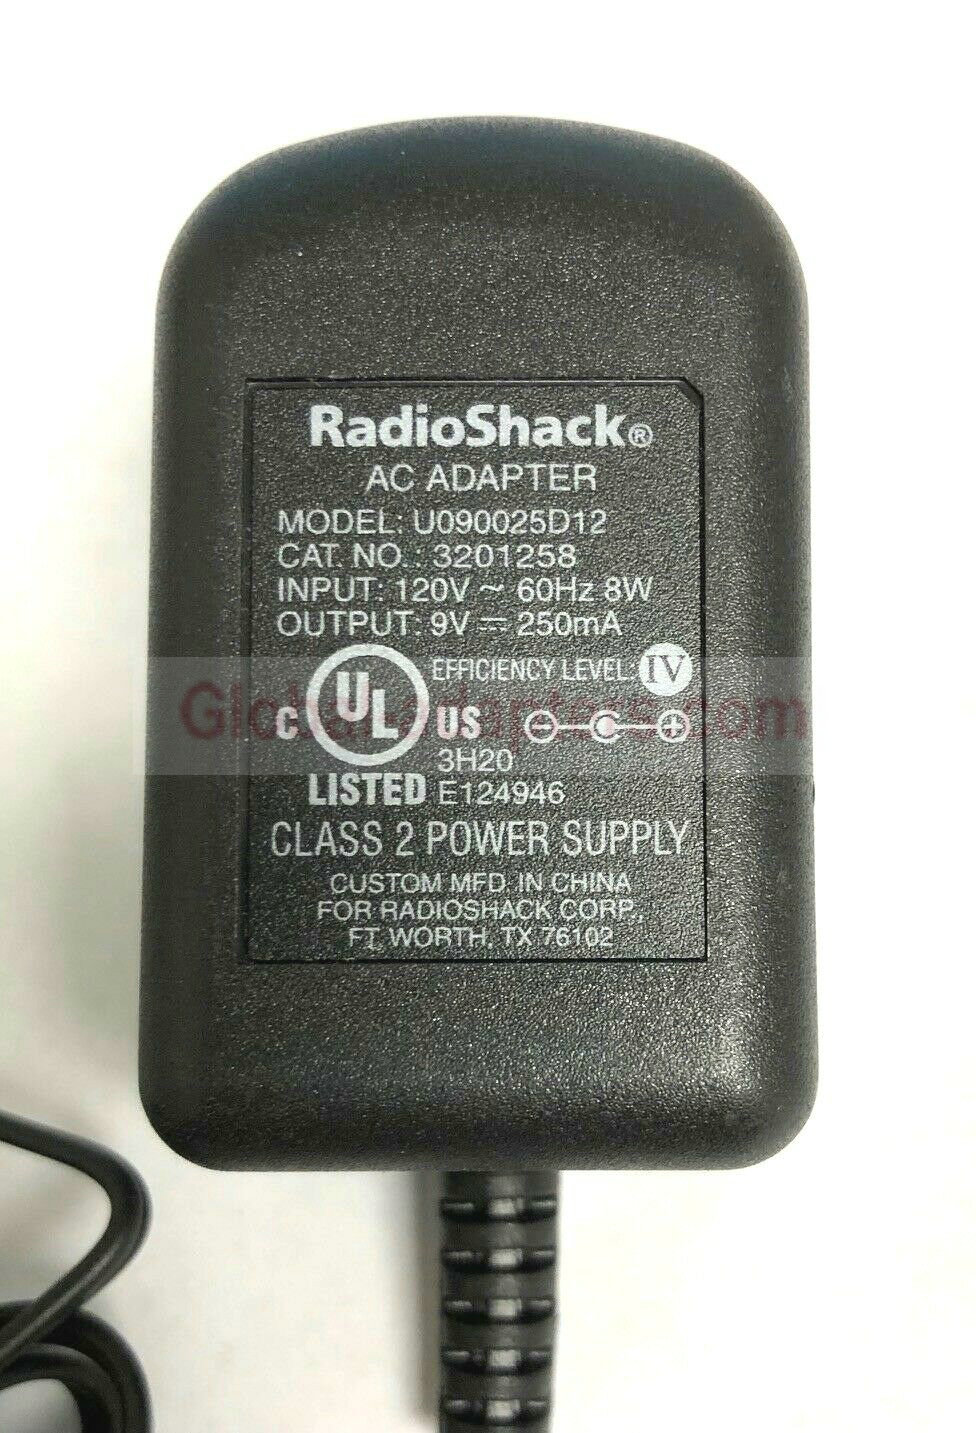 New 9V 250mA RadioShack U090025D12 3201258 Power Supply AC ADAPTER